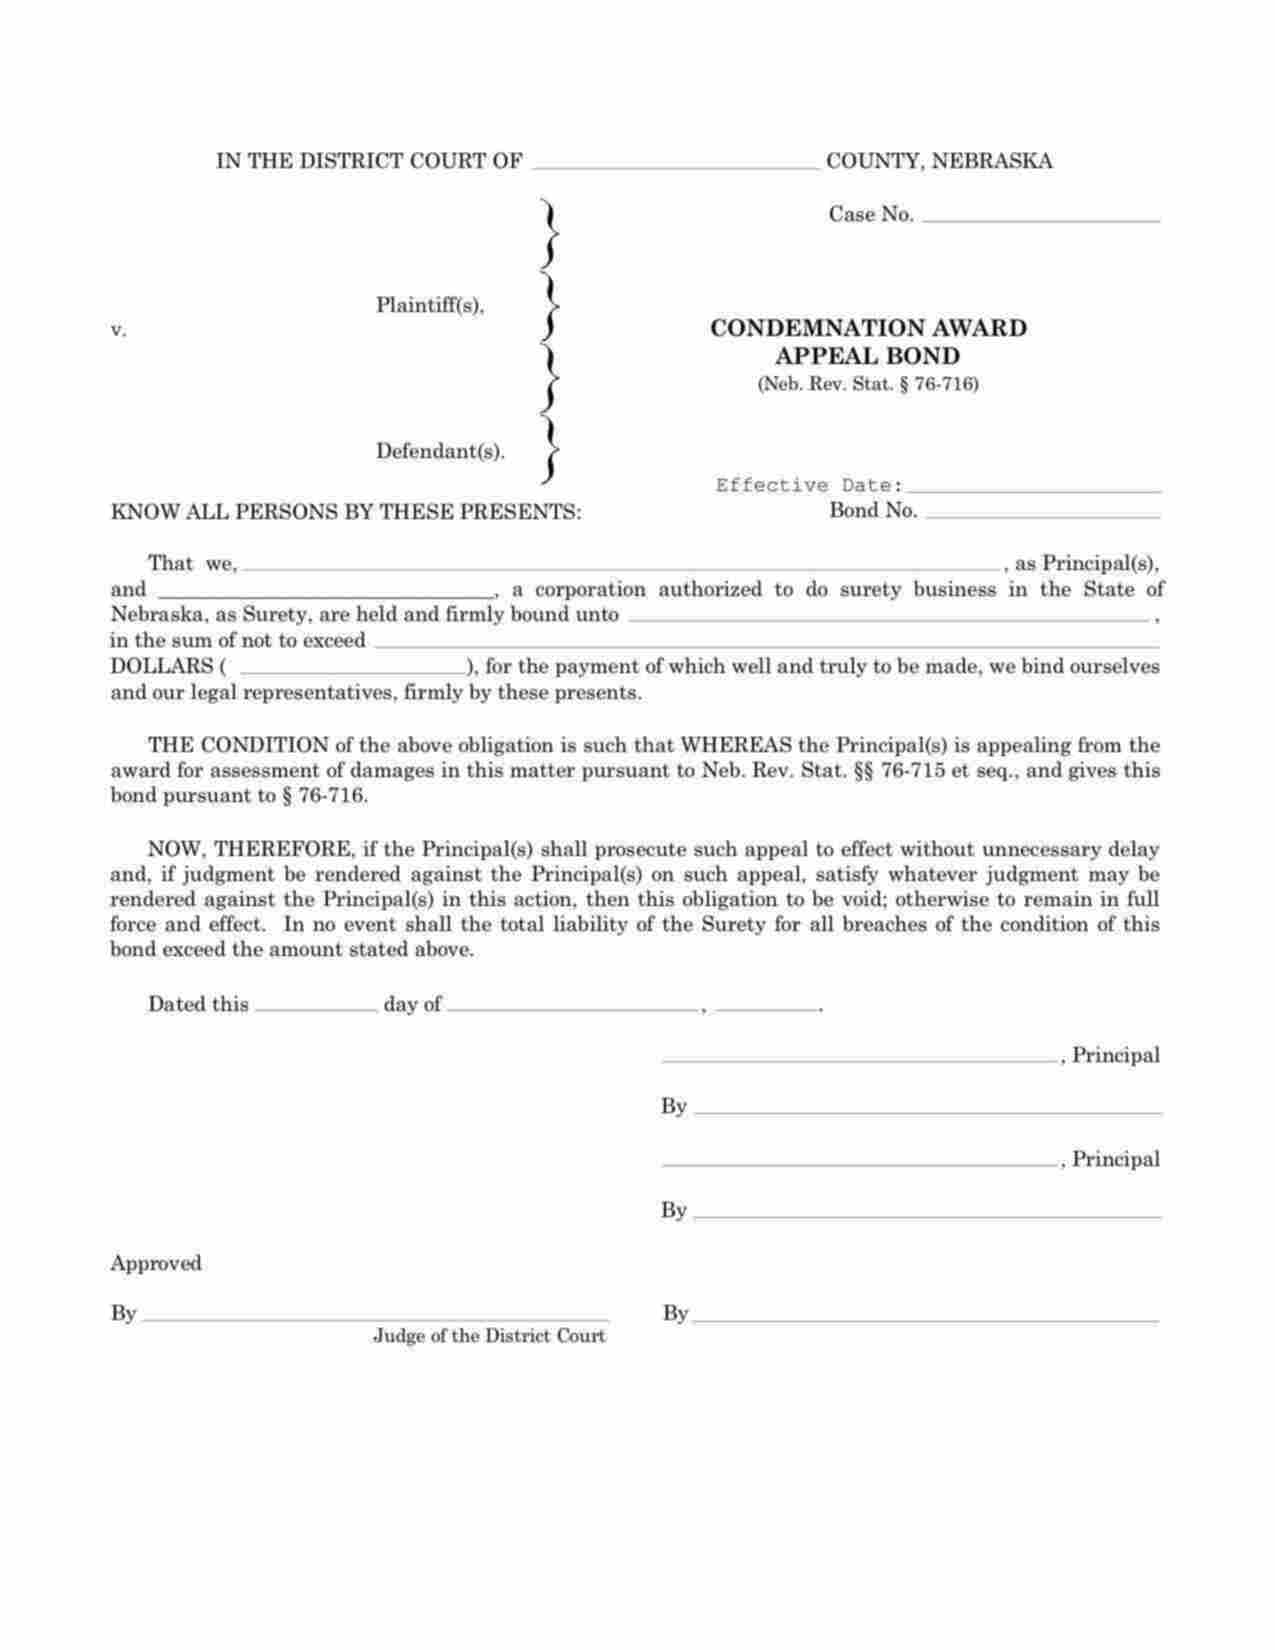 Nebraska Condemnation Award Appeal Bond Form